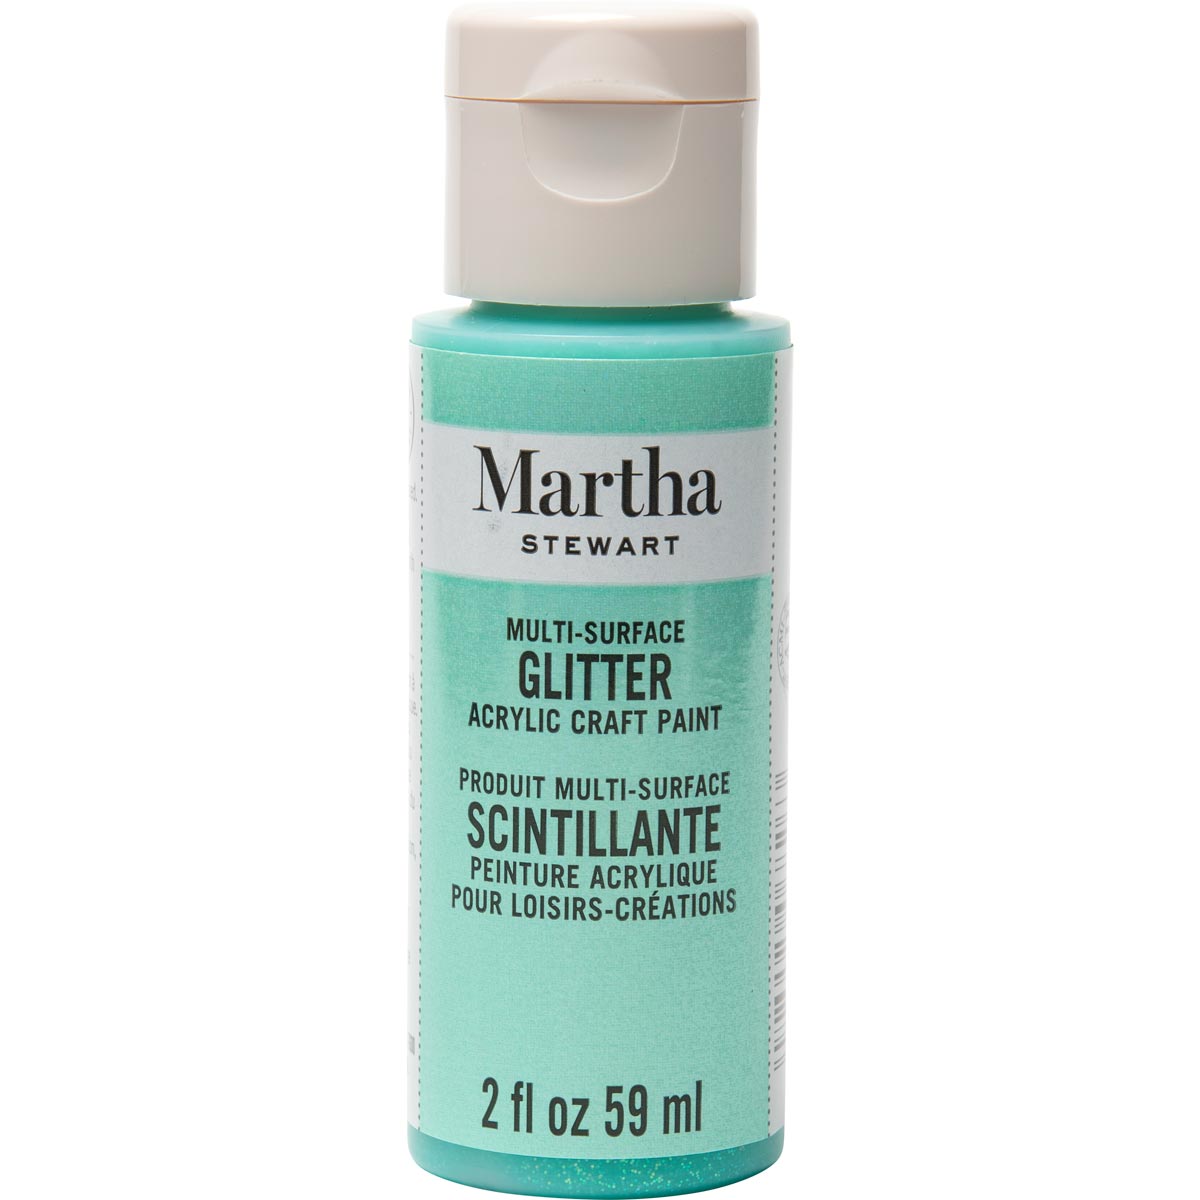 Martha Stewart ® Multi-Surface Glitter Acrylic Craft Paint - Wintermint, 2 oz. - 32147CA